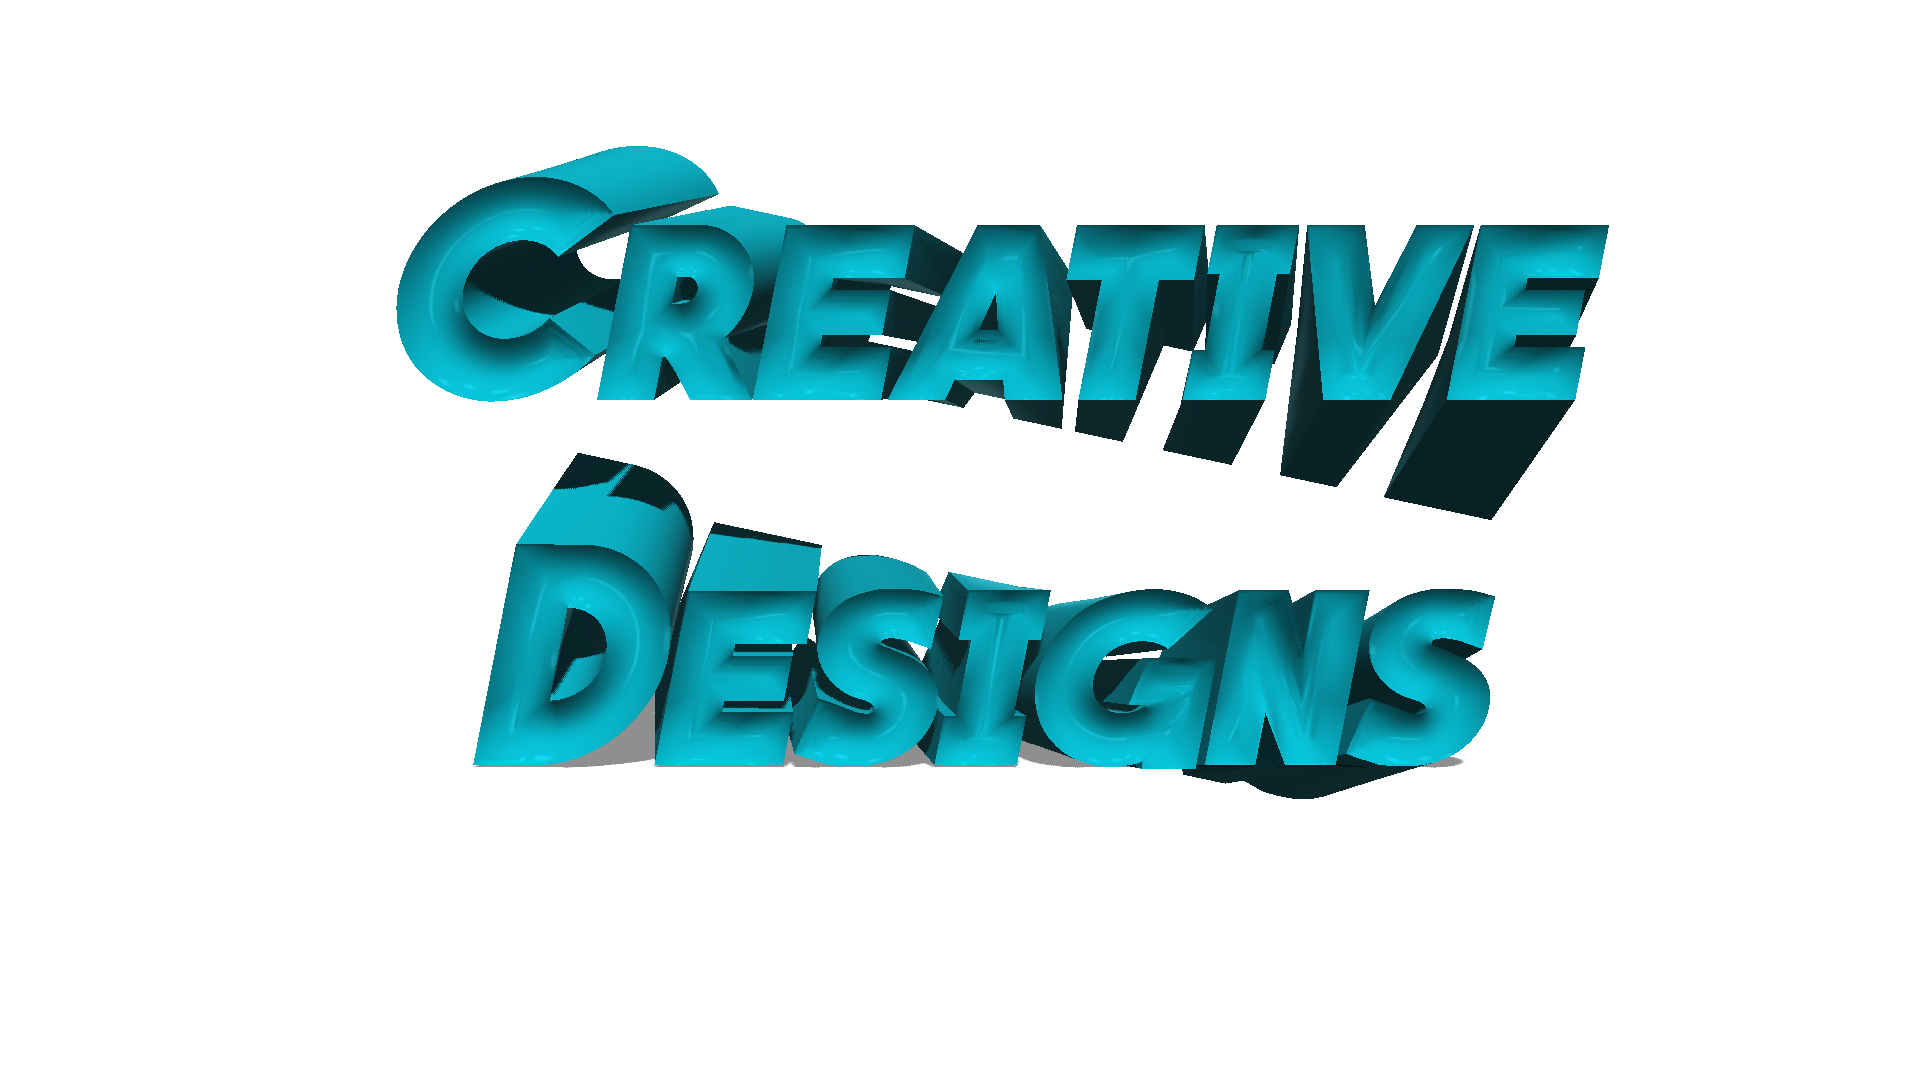 CREATIVE DESIGNS TEXT GRAPHIC(WEB) copy